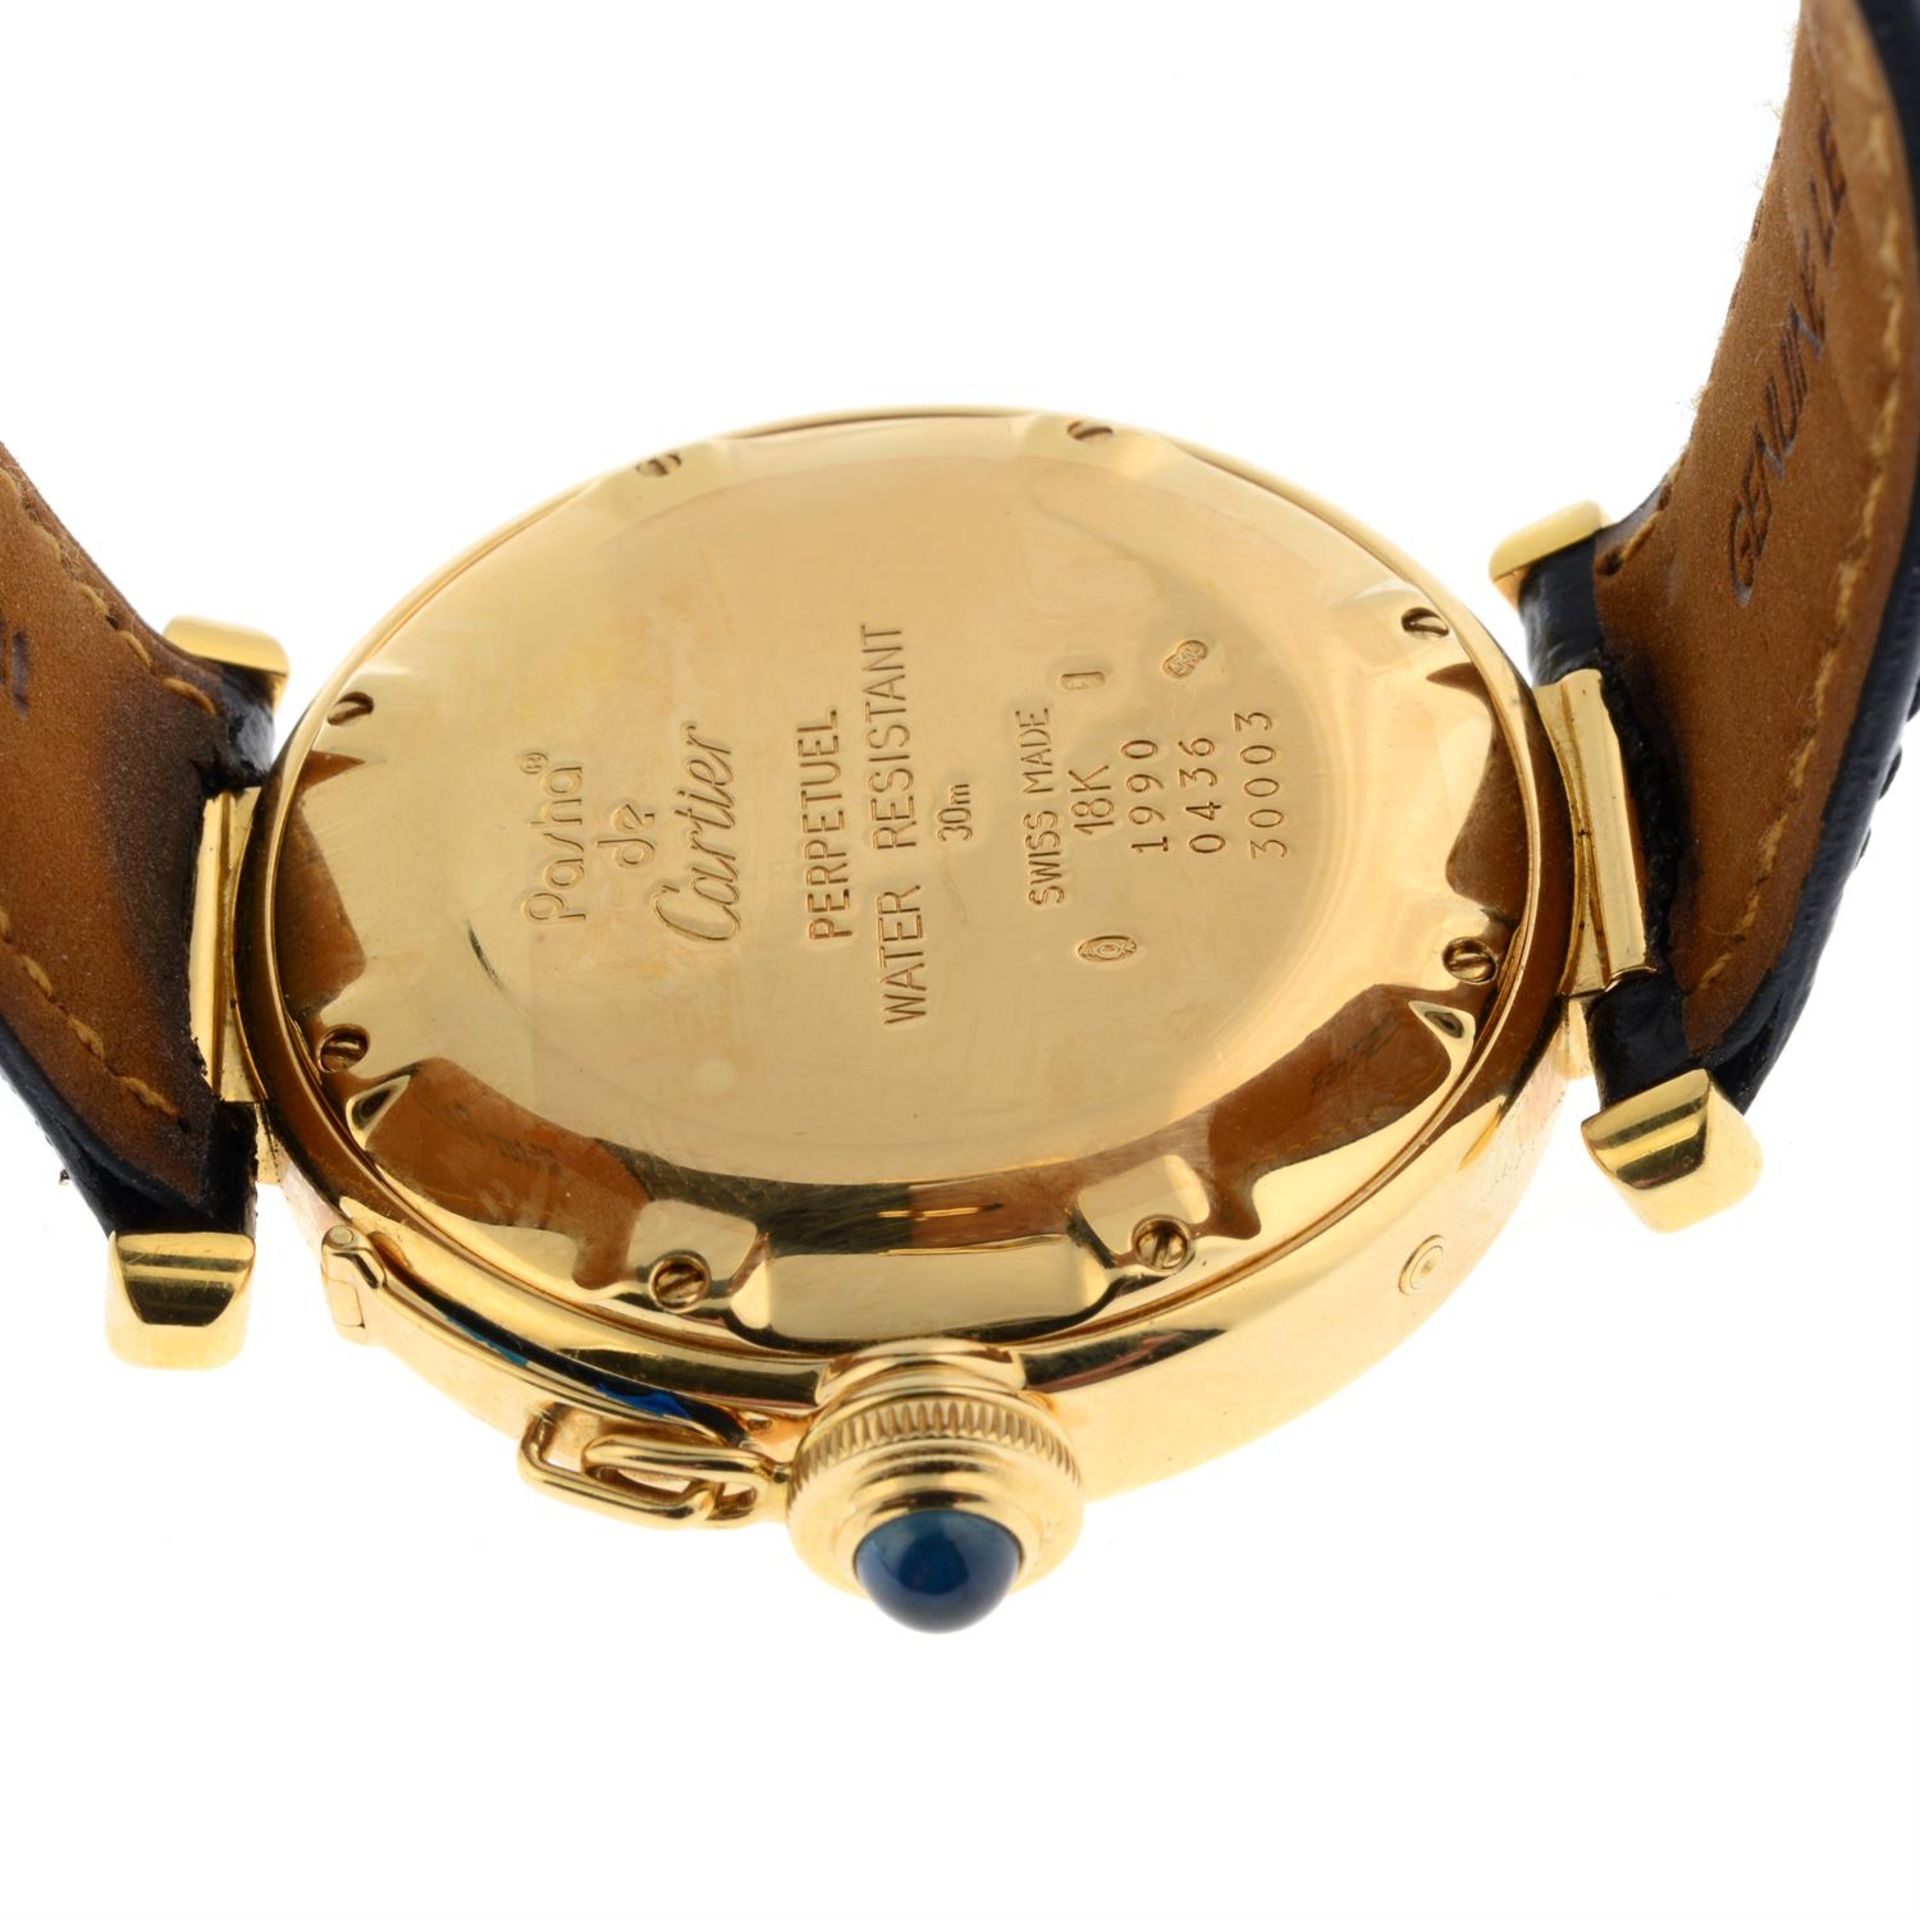 CARTIER - an 18ct yellow gold Pasha Perpetual Calendar wrist watch, 38mm. - Image 2 of 5